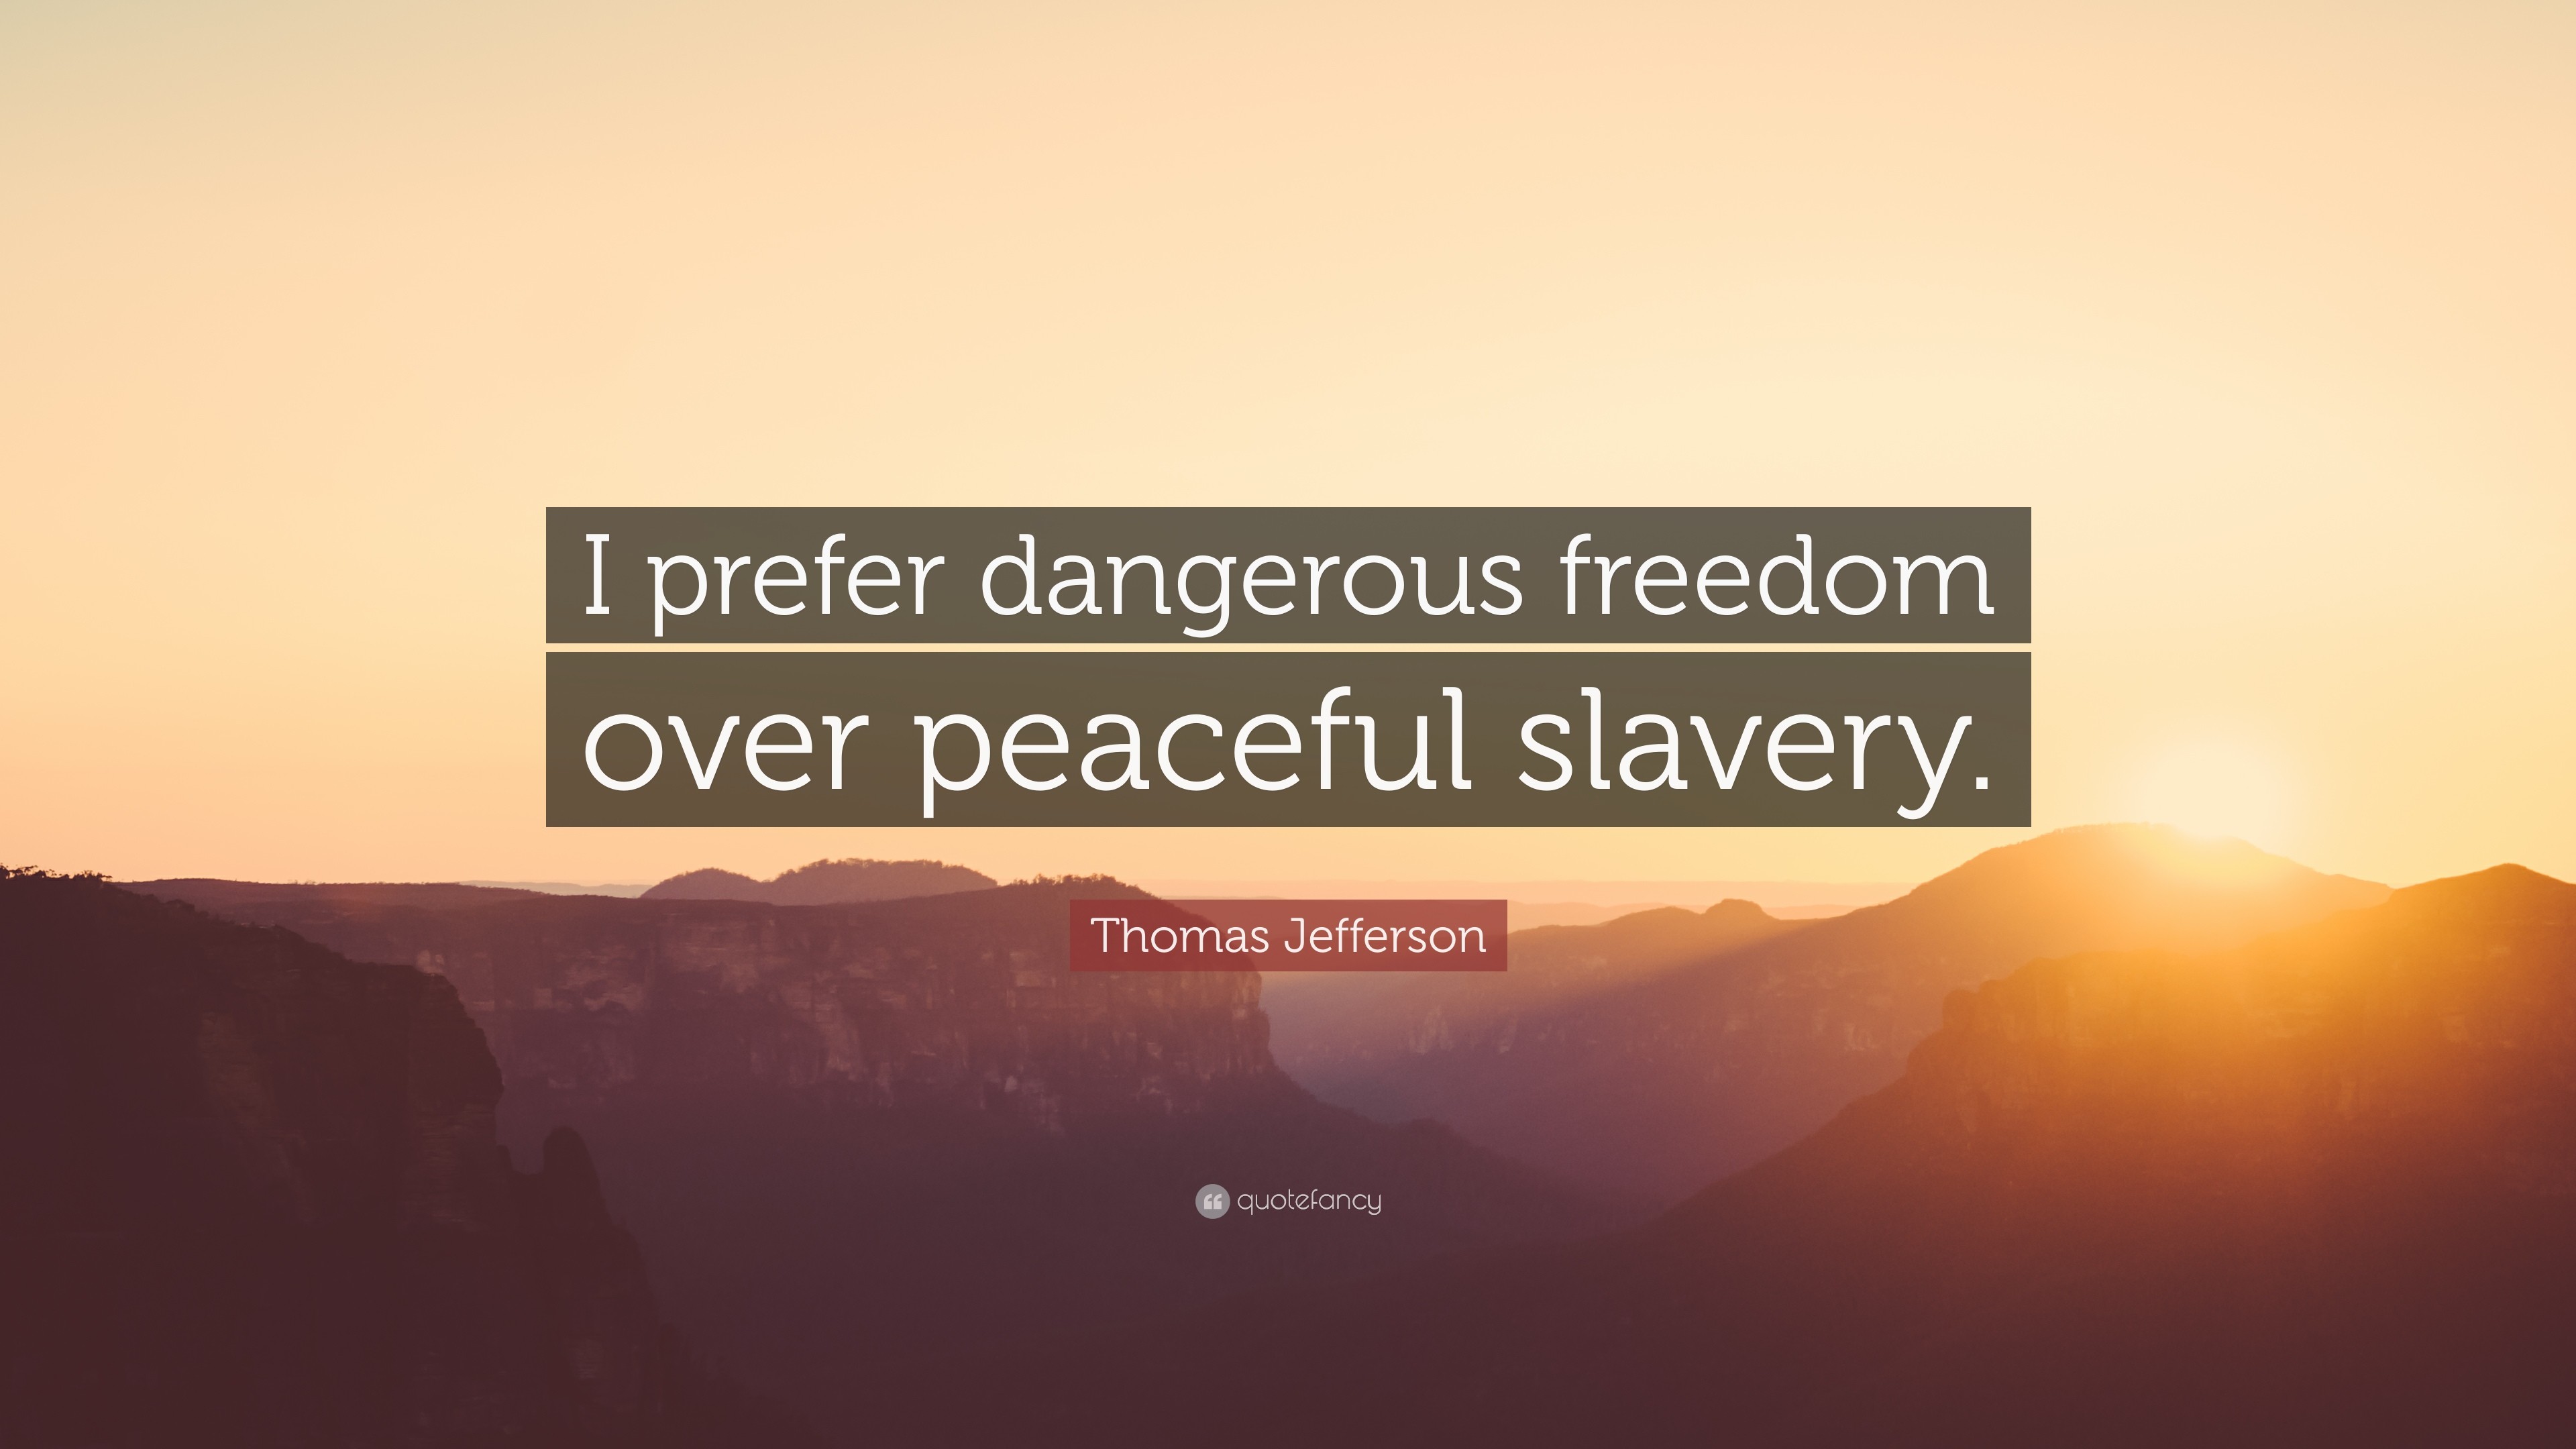 3840x2160 Thomas Jefferson Quote: “I prefer dangerous freedom over peaceful slavery.”